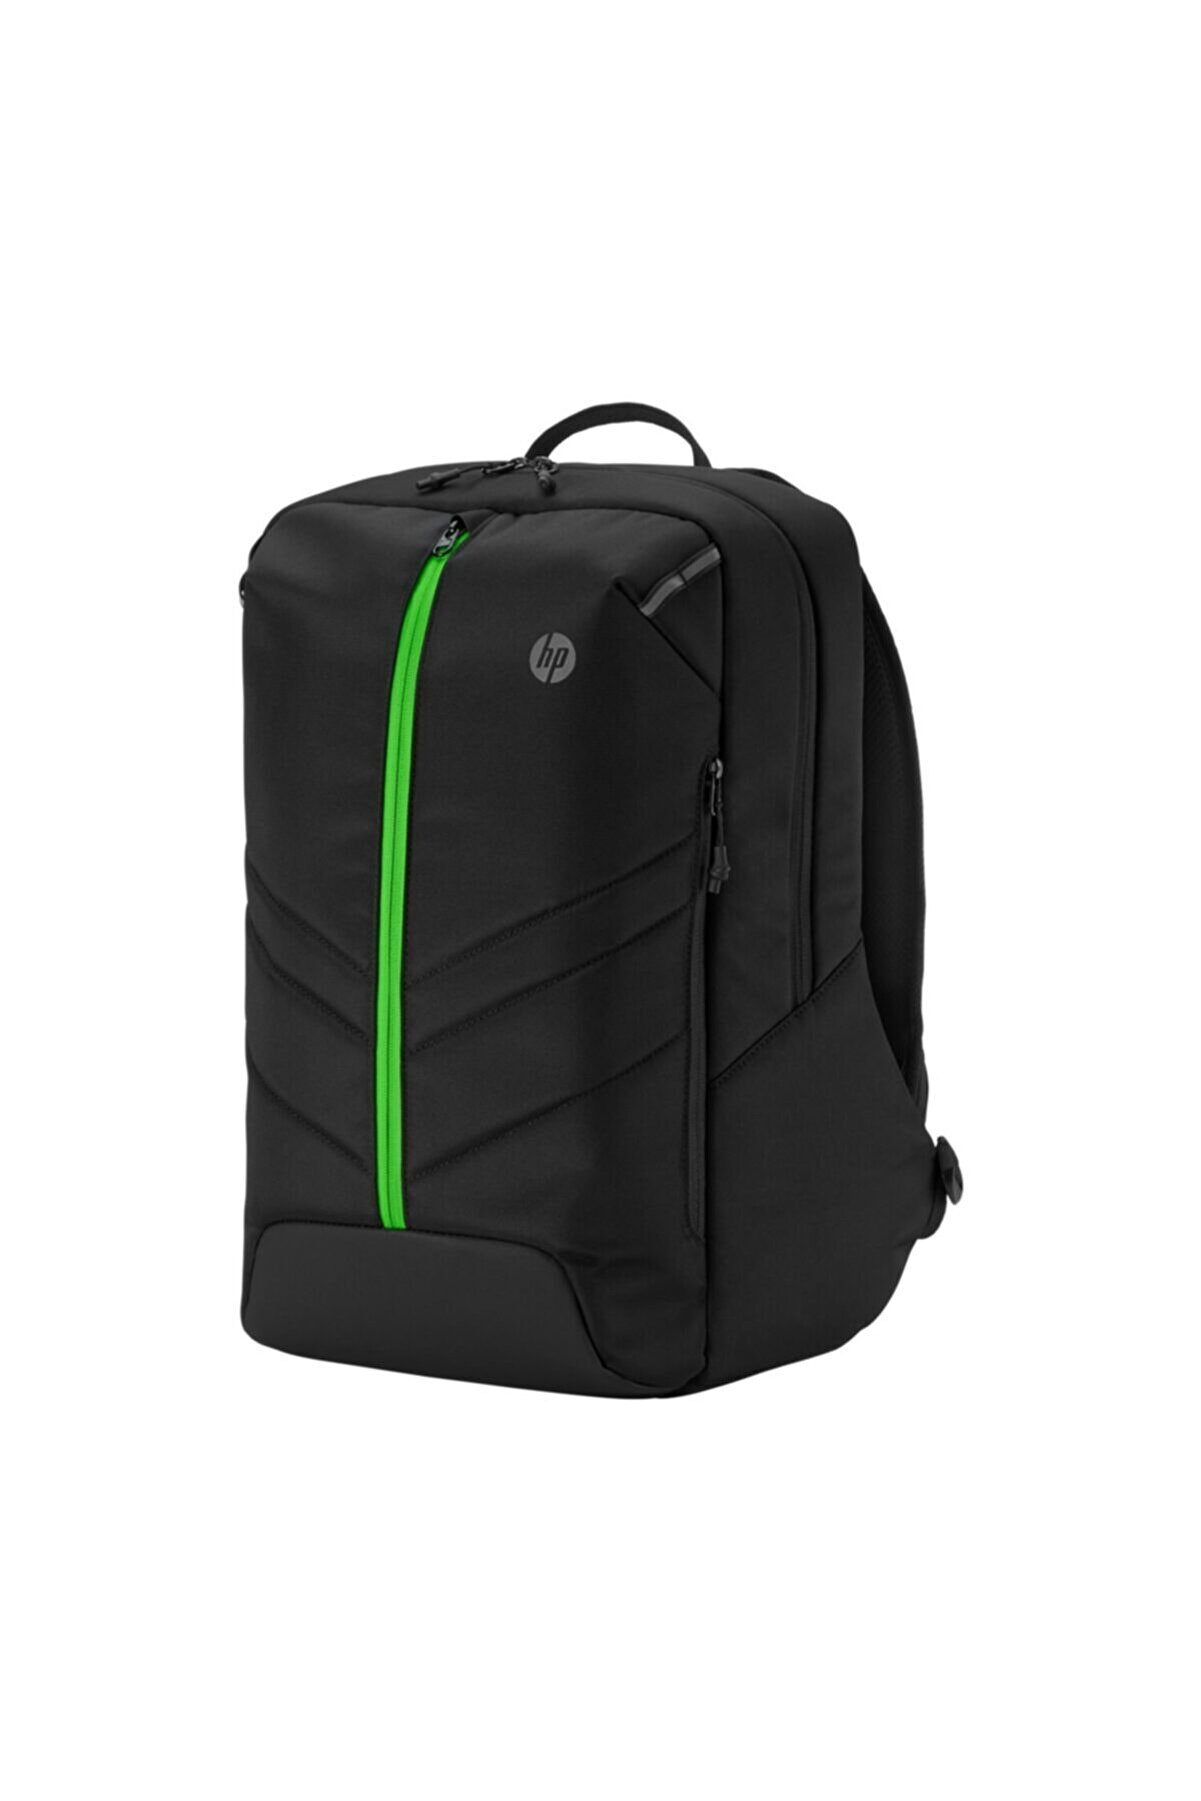 HP Pavilion 500 Gaming 6eu58aa 17.3 Inç Notebook Sırt Çantası - Siyah & Neon Yeşili